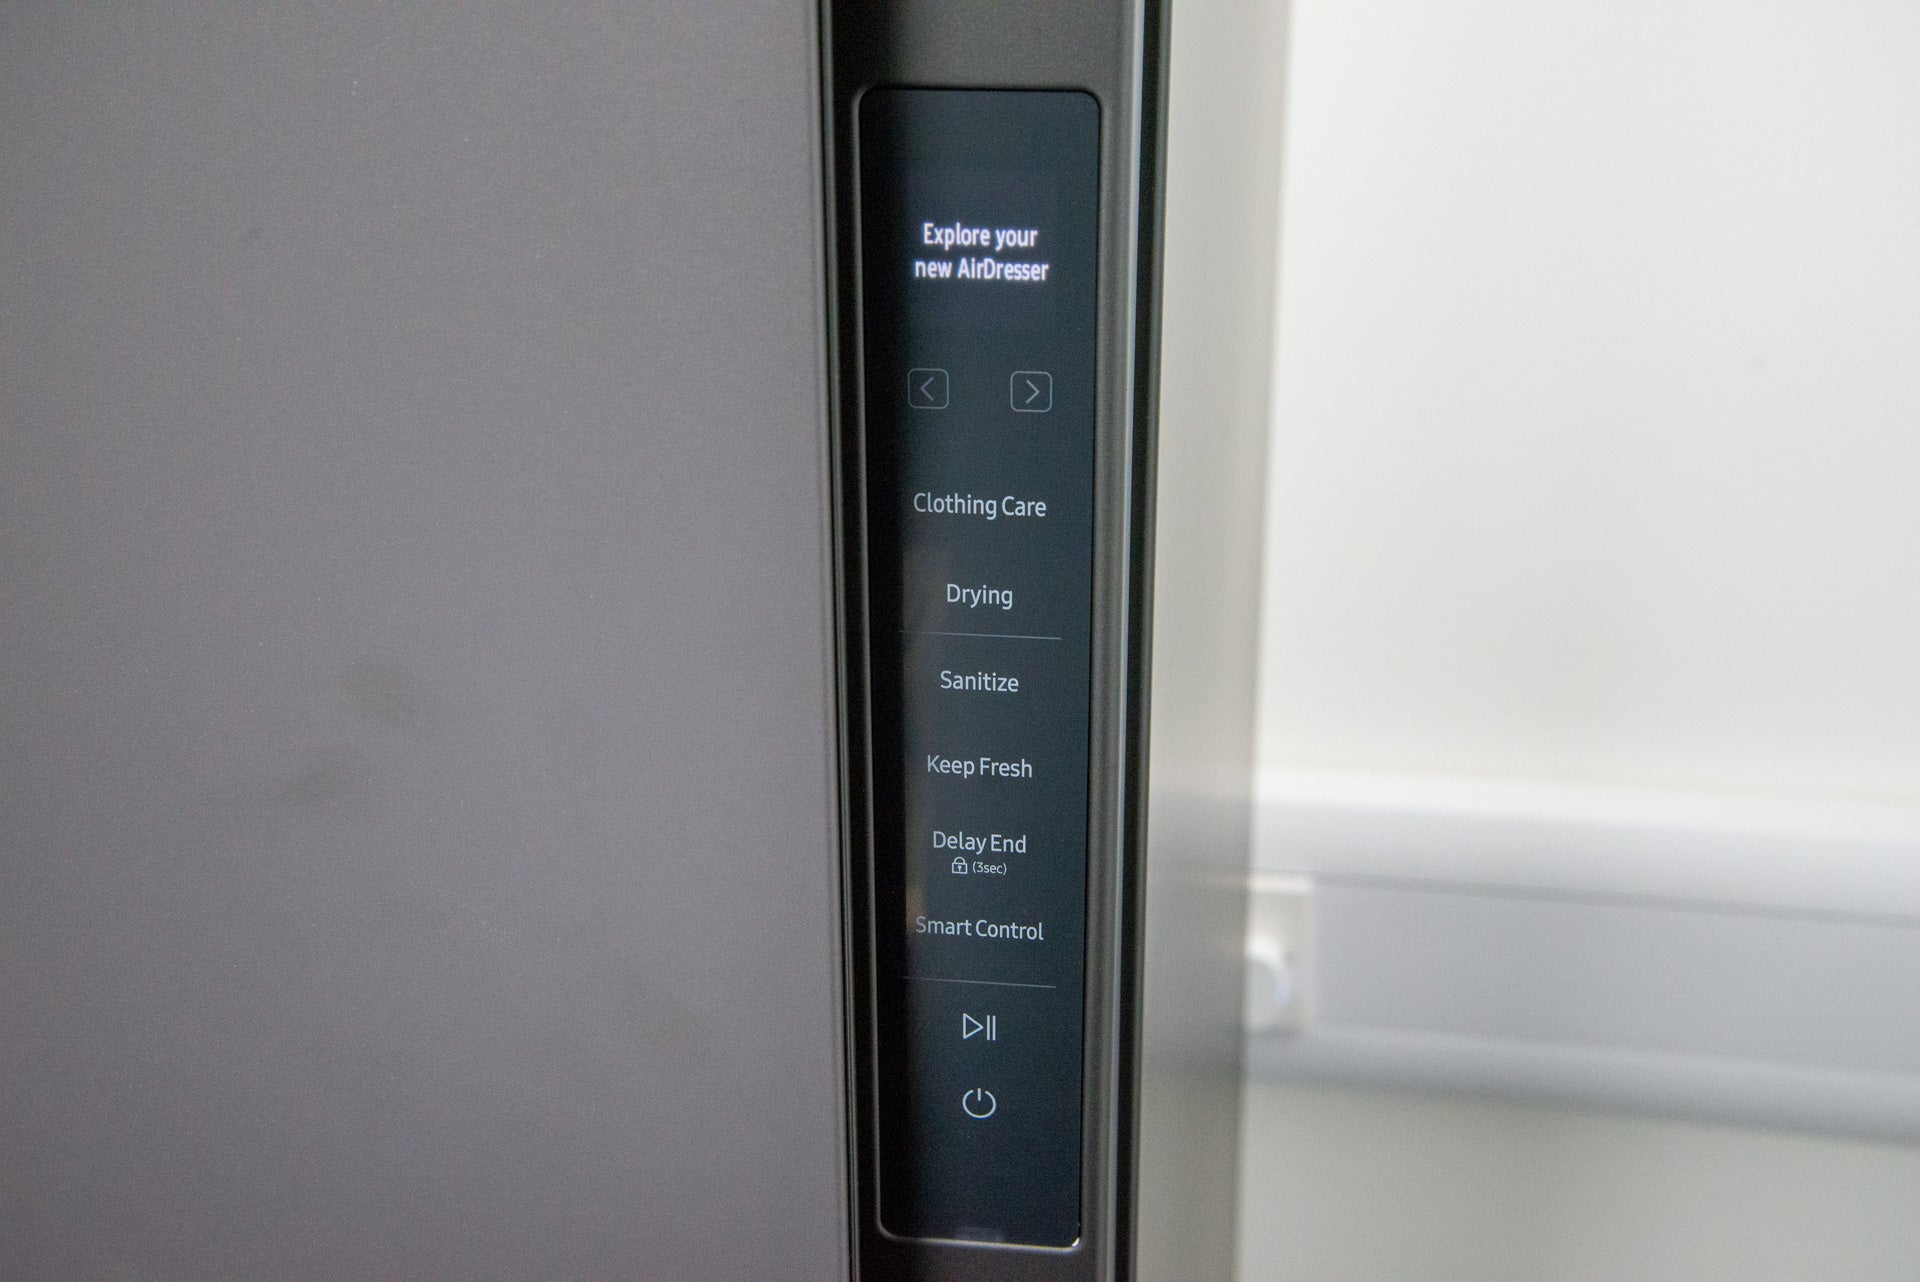 Samsung Bespoke AirDresser controls